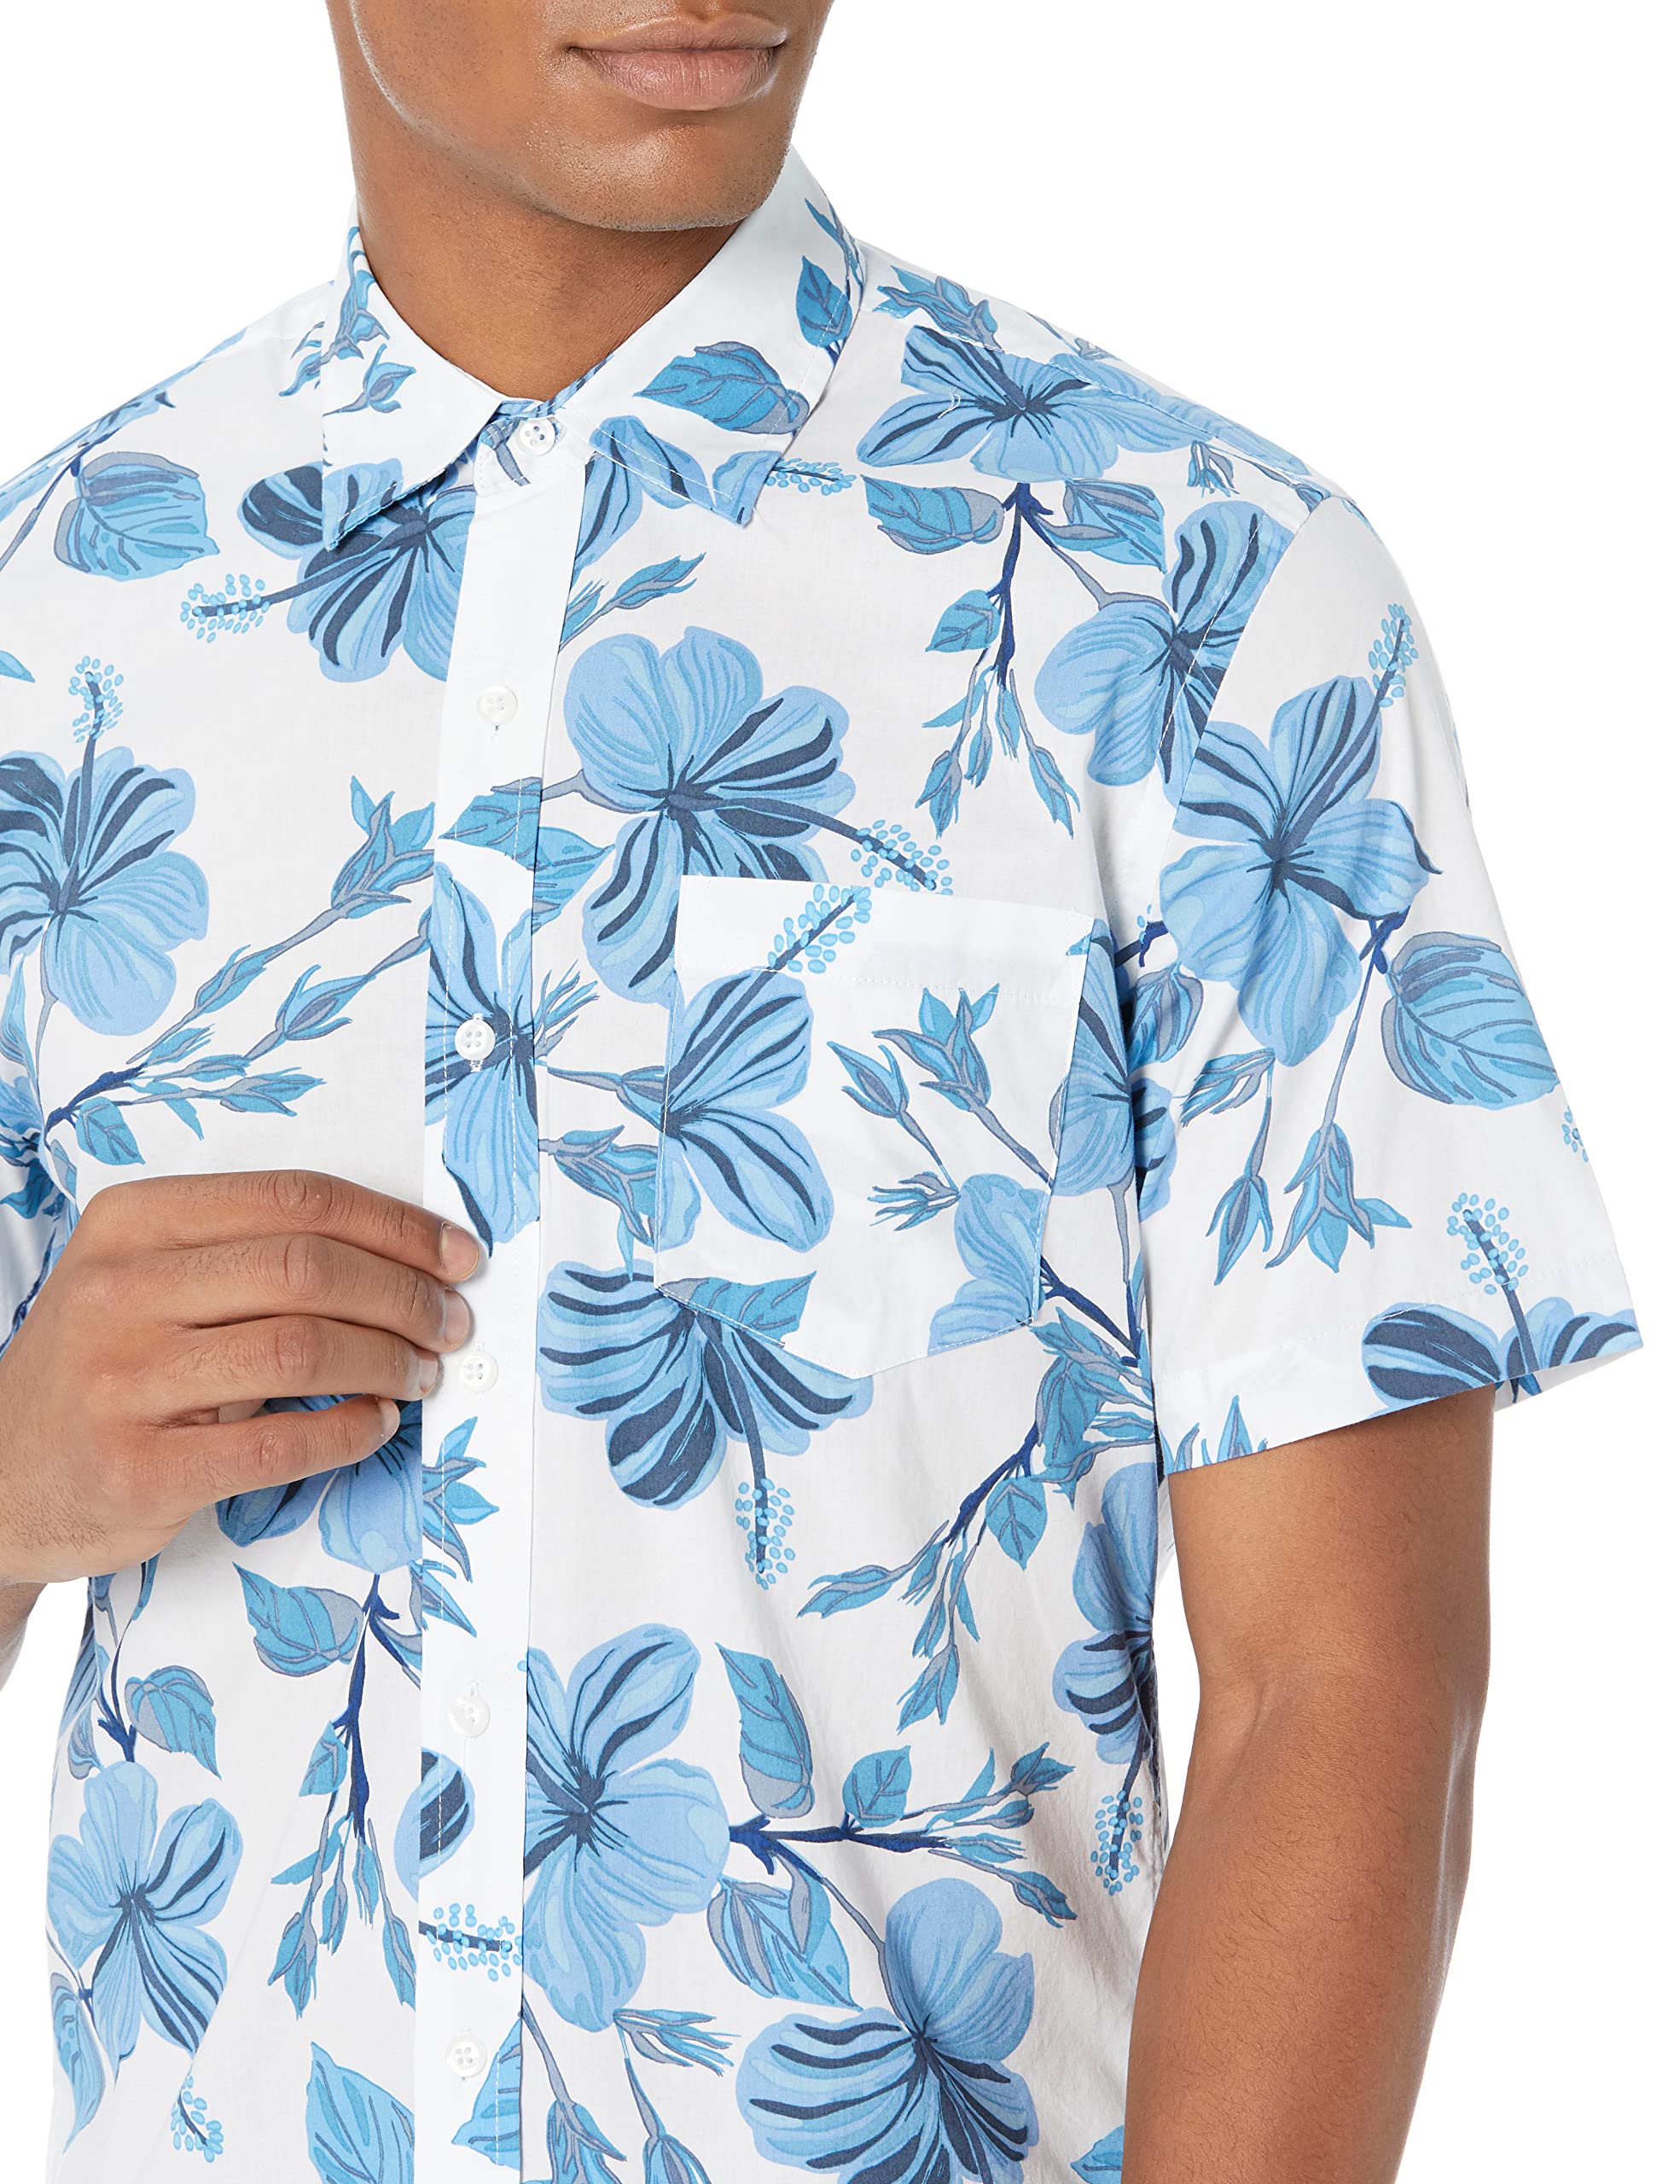 Amazon Essentials Men's Slim-Fit Short-Sleeve Print Shirt